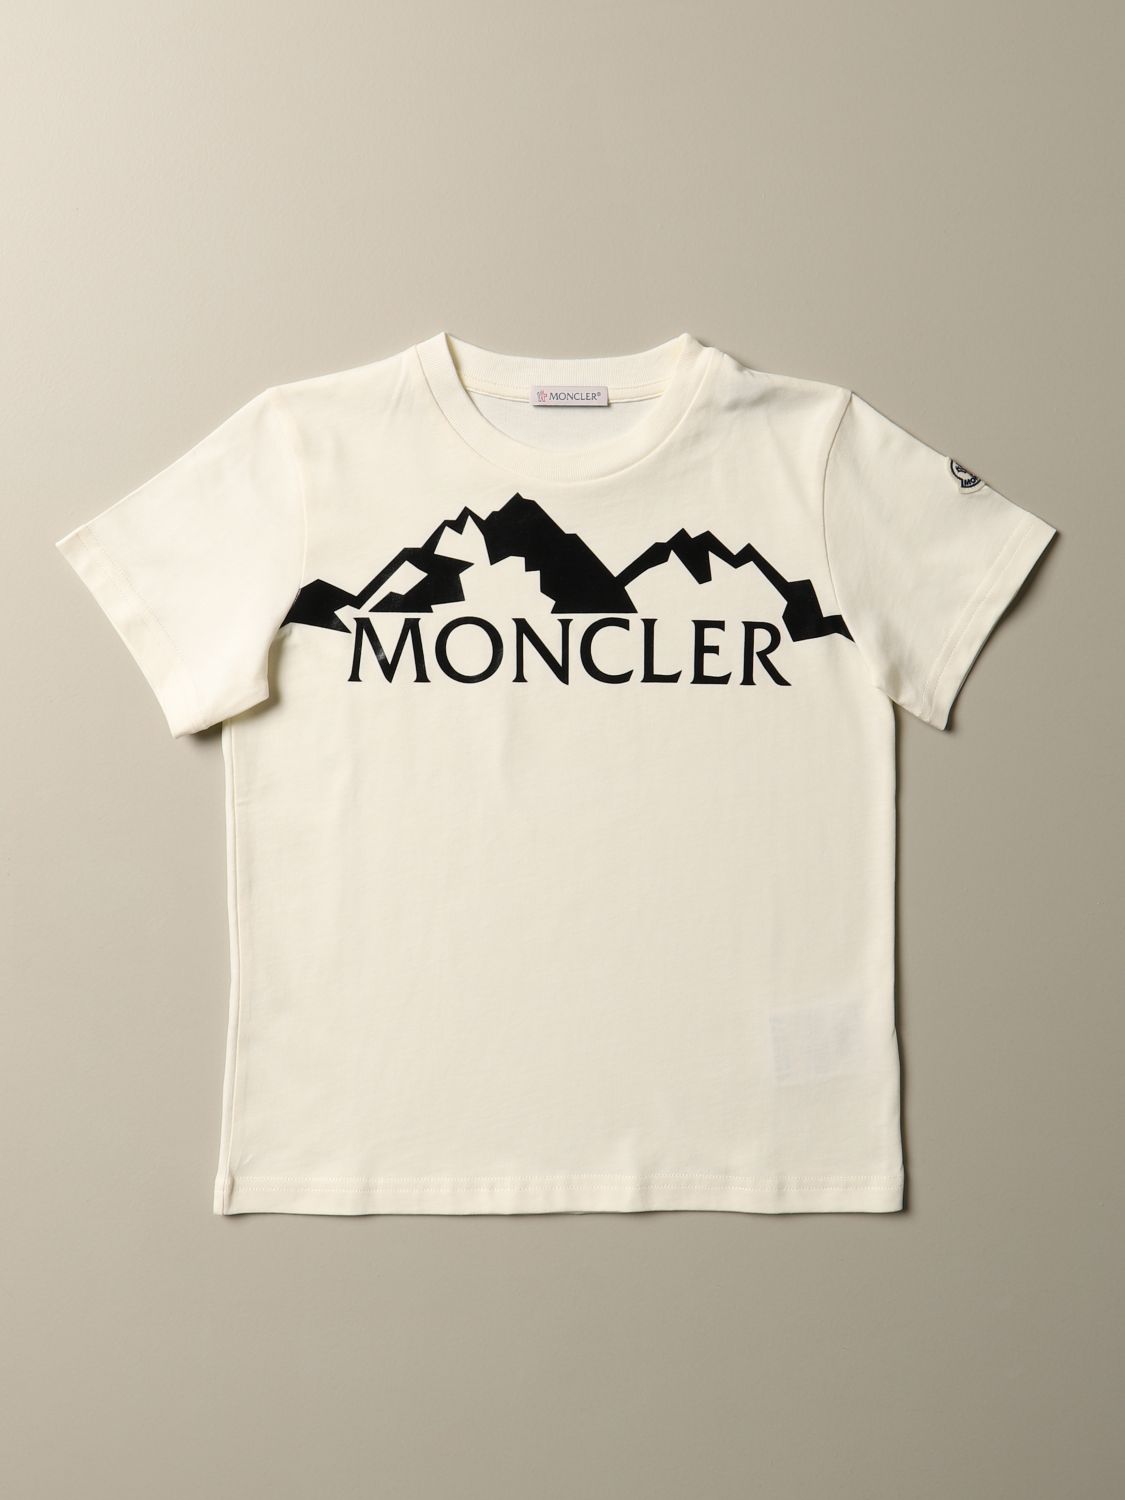 moncler shirt kids